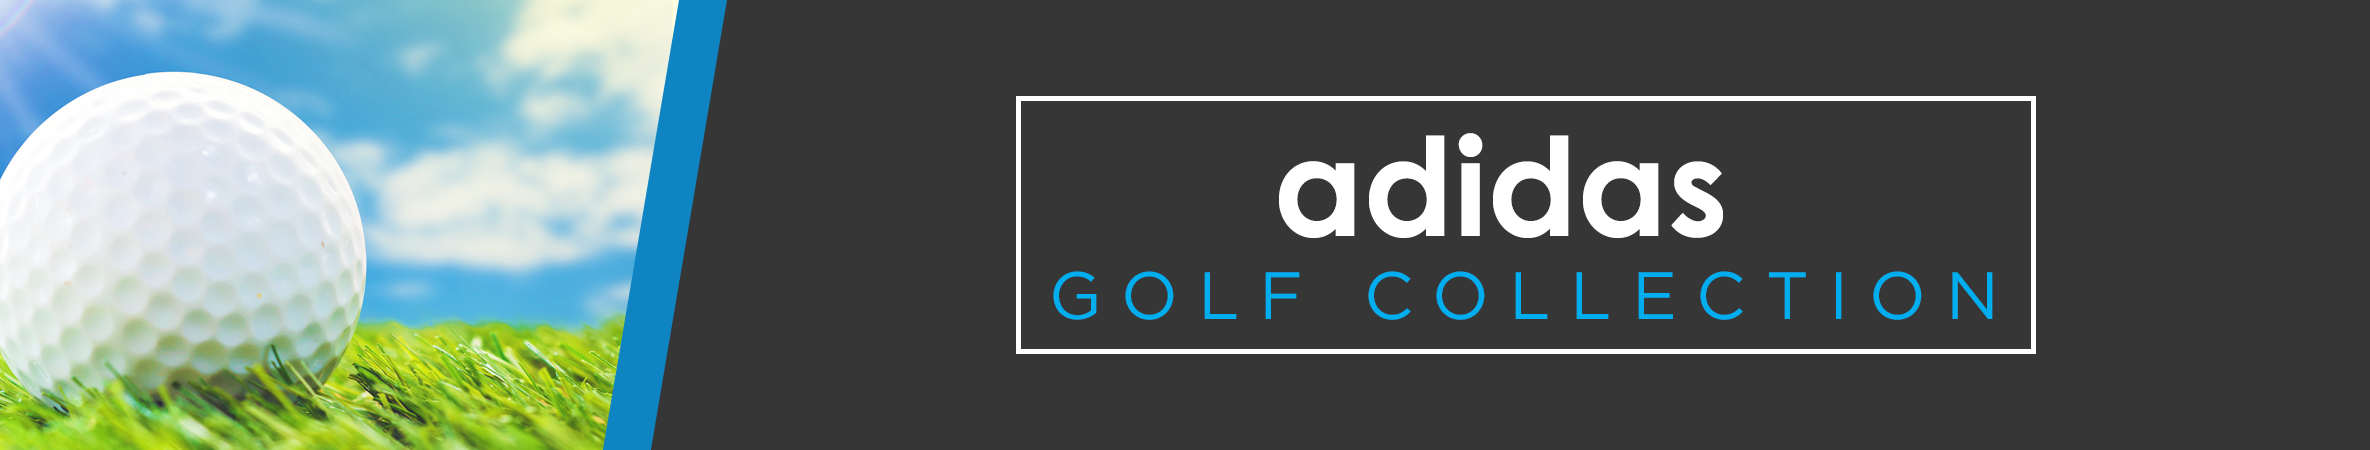 adidas Golf Collection!